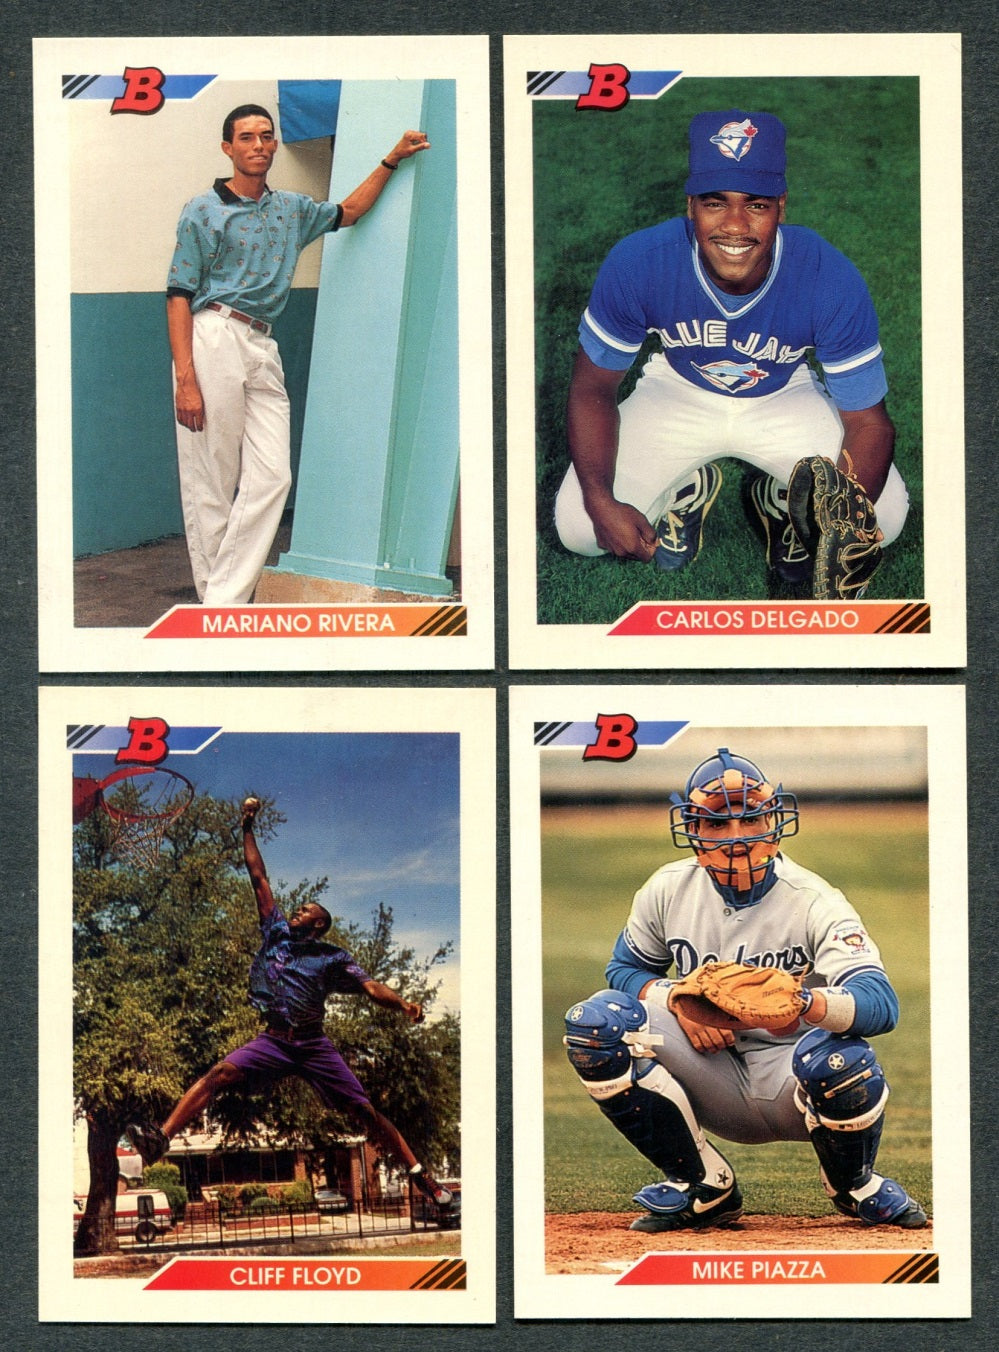 1992 Bowman Baseball Complete Set NM/MT (705) (23-258)